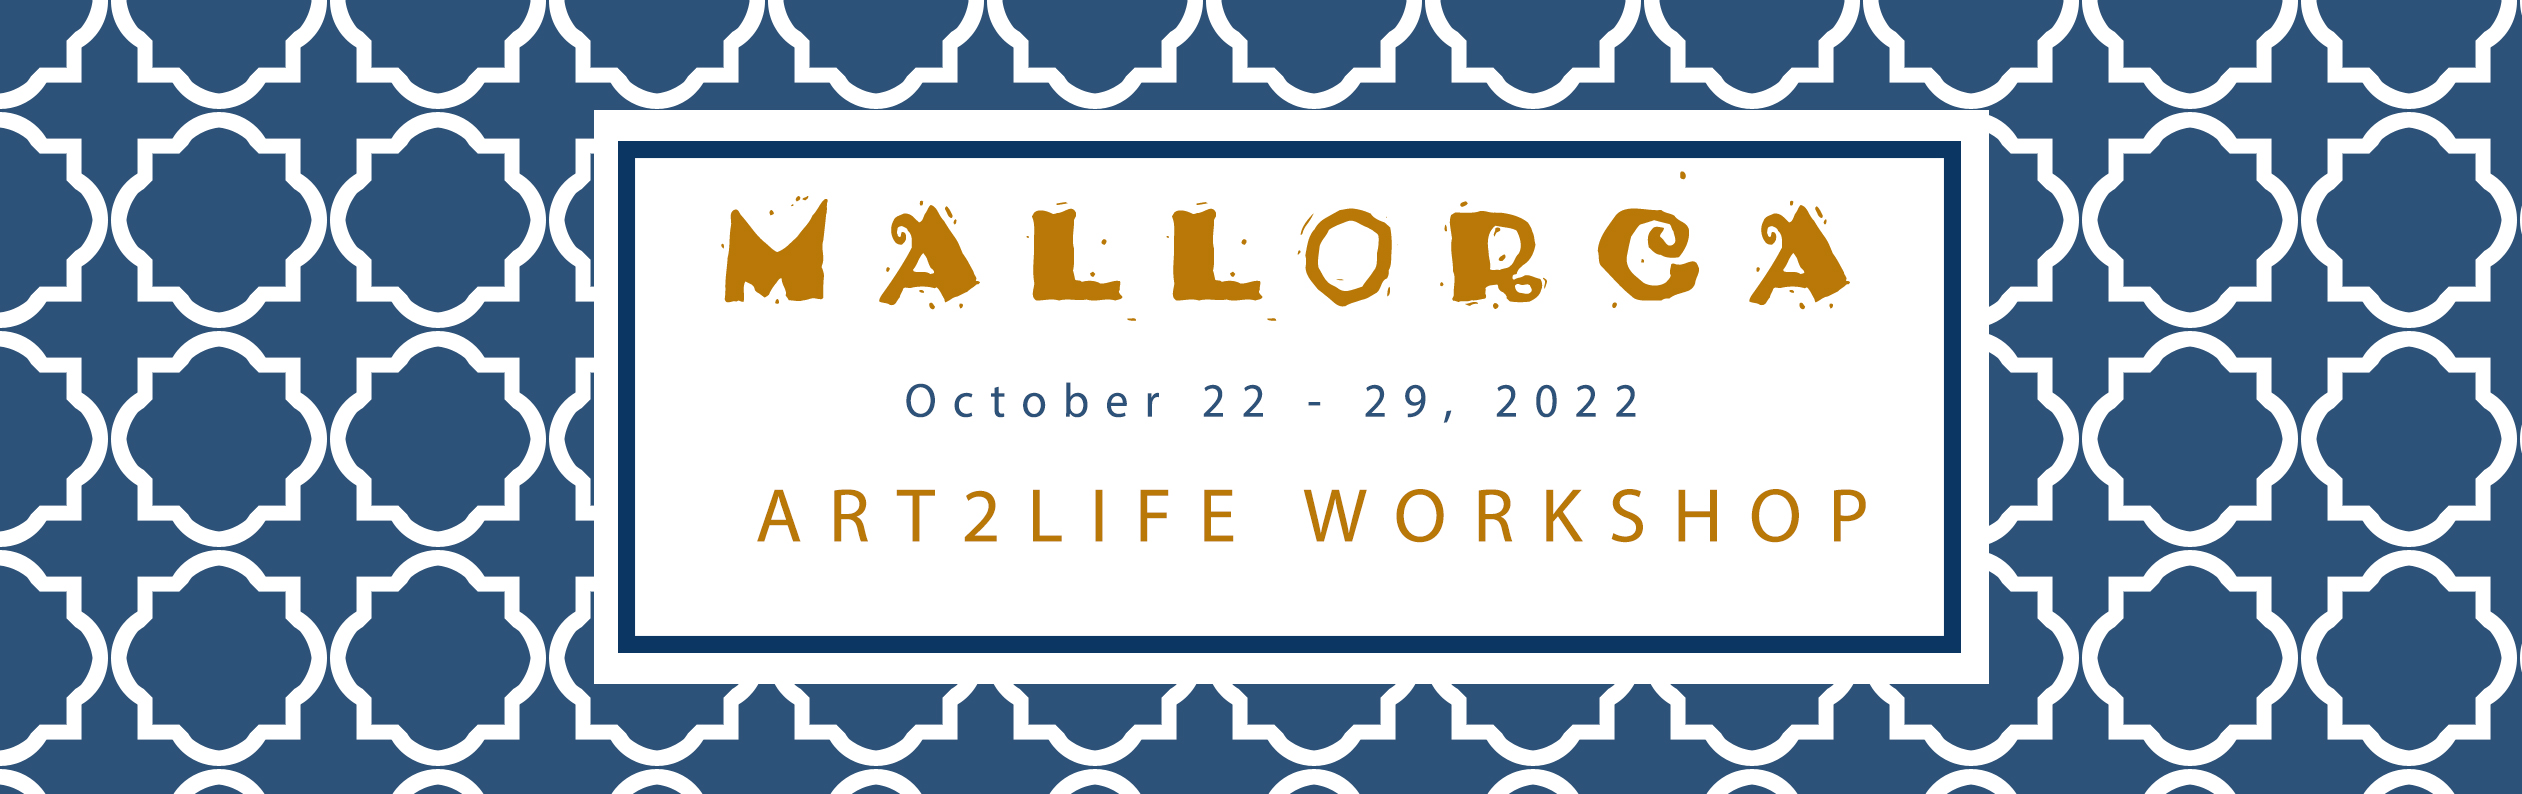 Mallorca Workshop Banner 2022